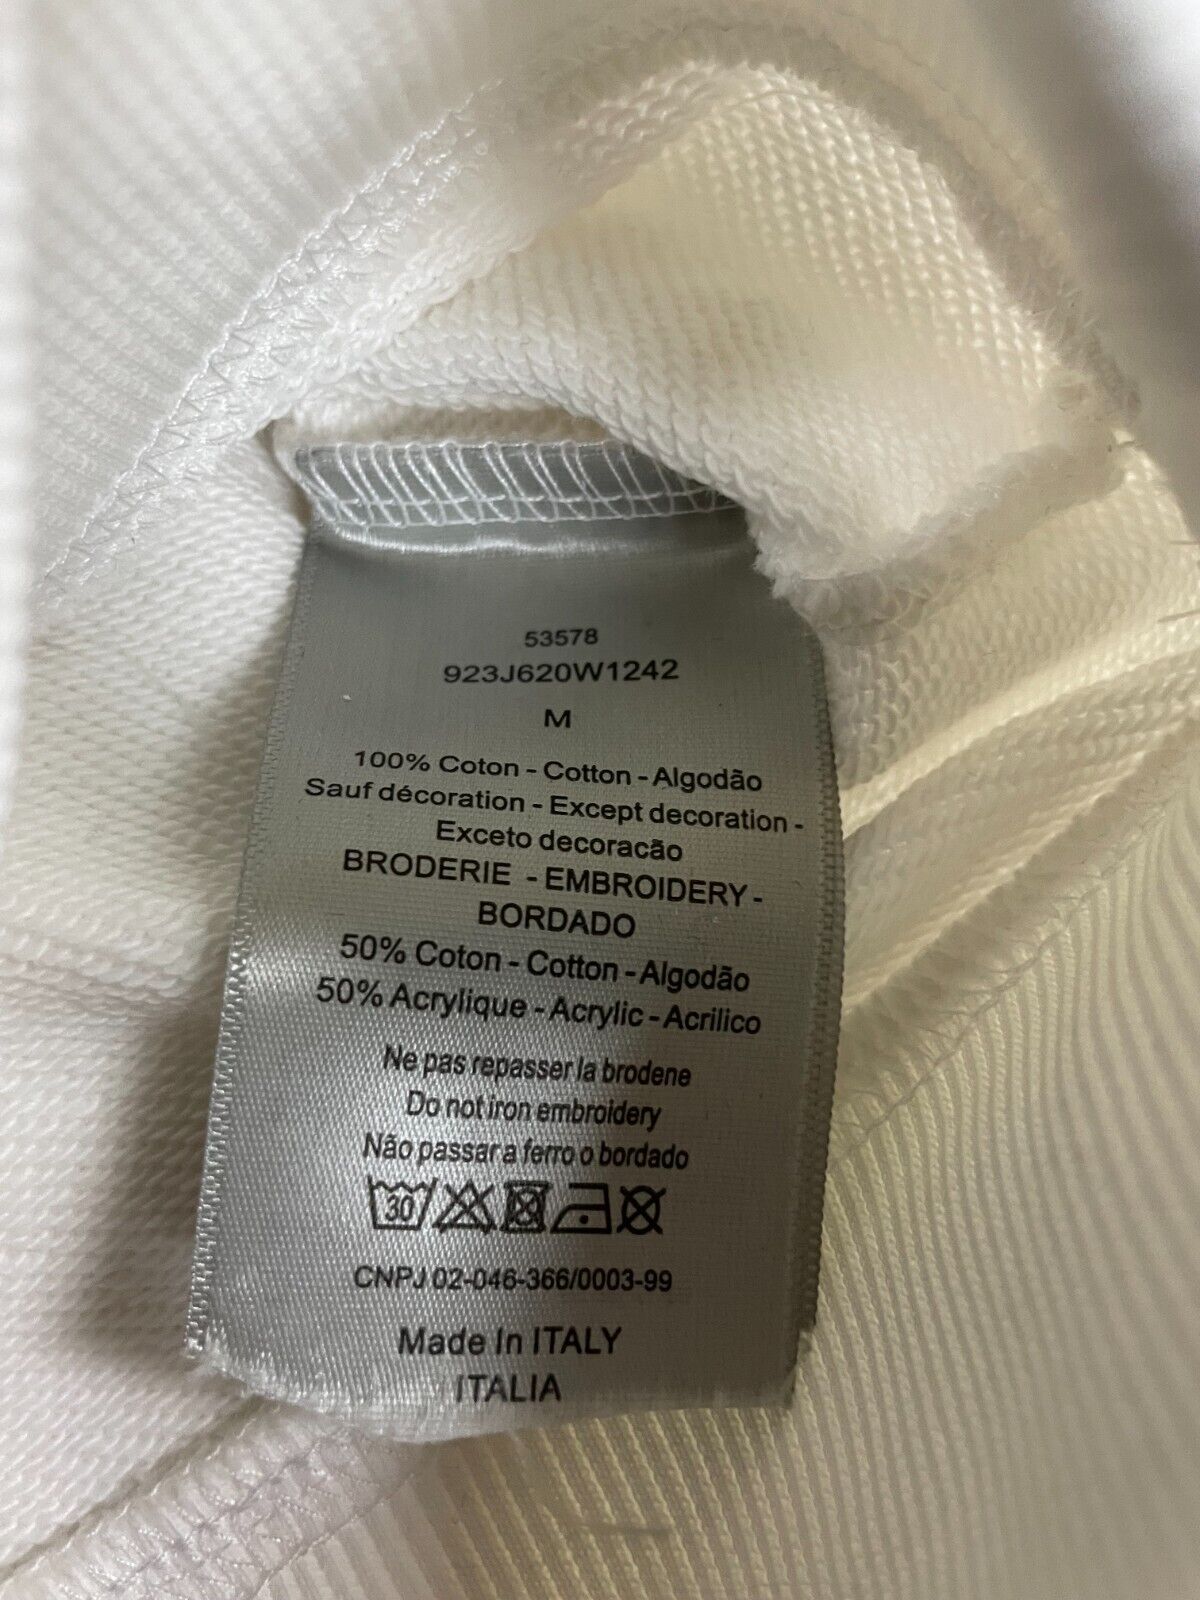 Air Dior - Nike Dior Sweatshirt - Size Medium